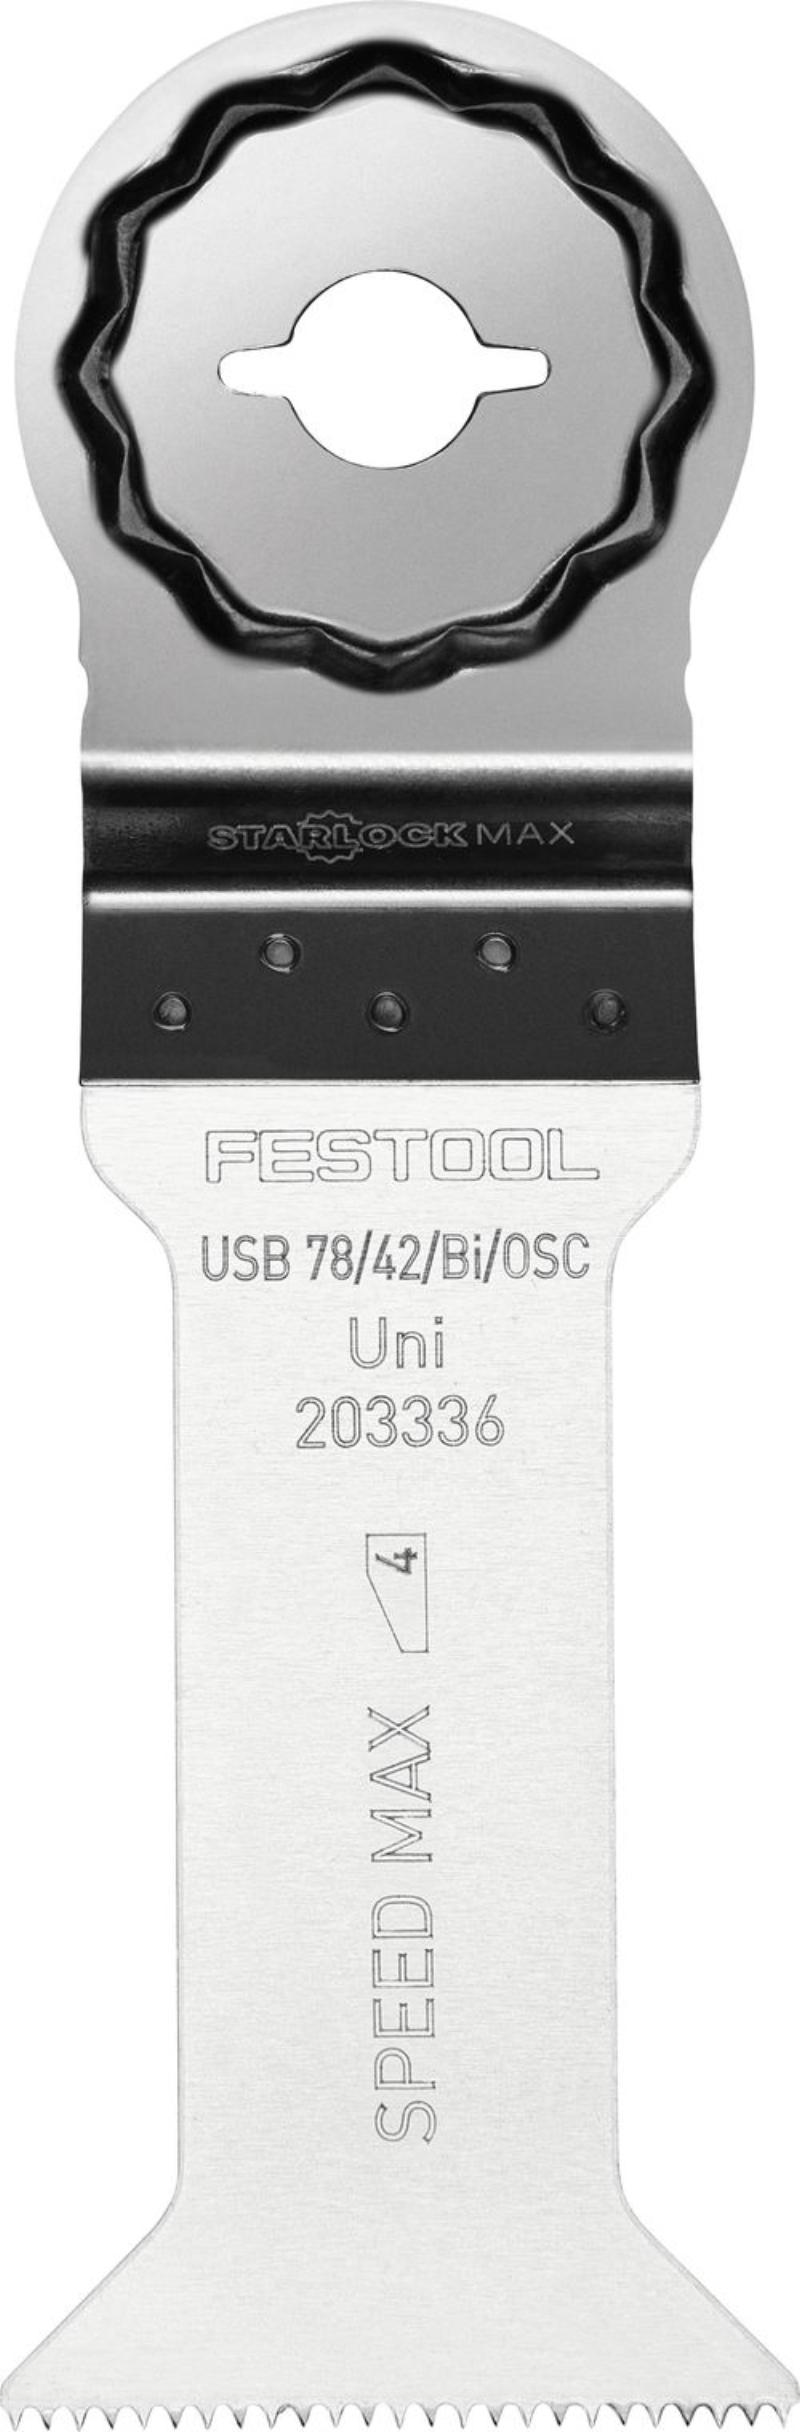 Festool Universal-savklinge USB 78/42/Bi/OSC, 1 stk